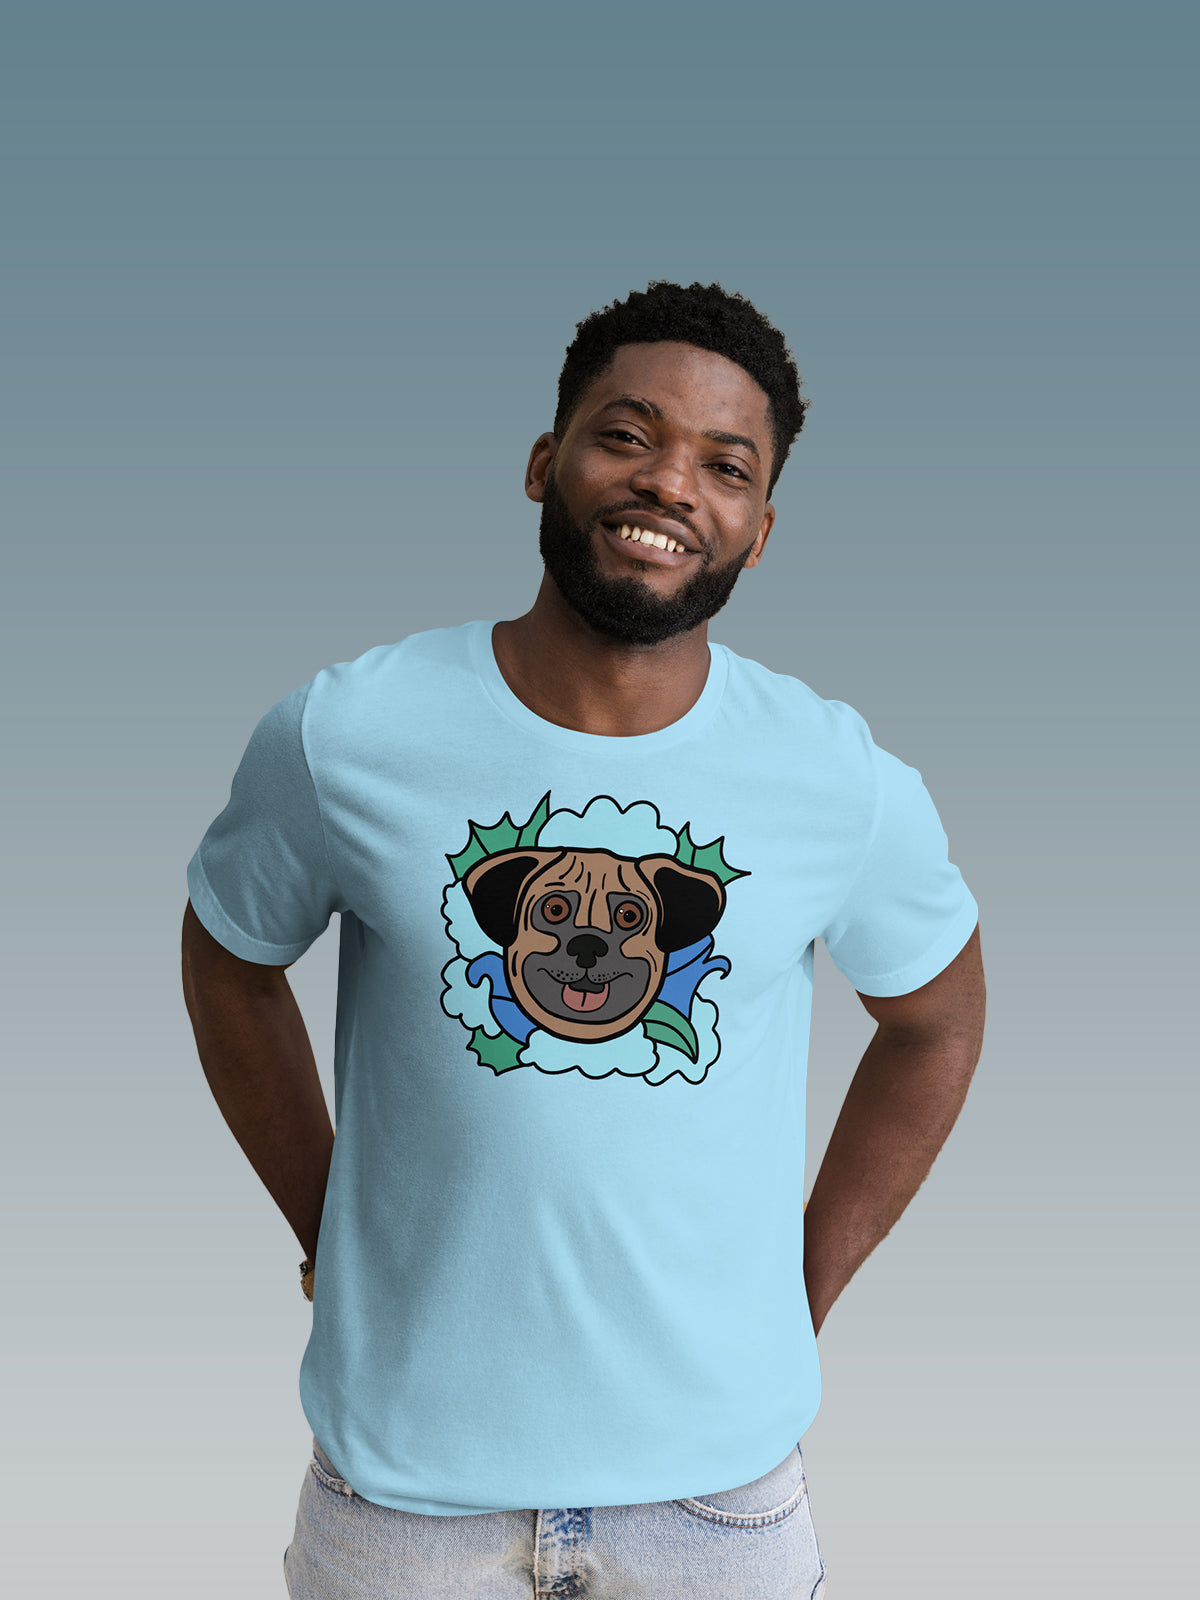 The Puggy T-shirt